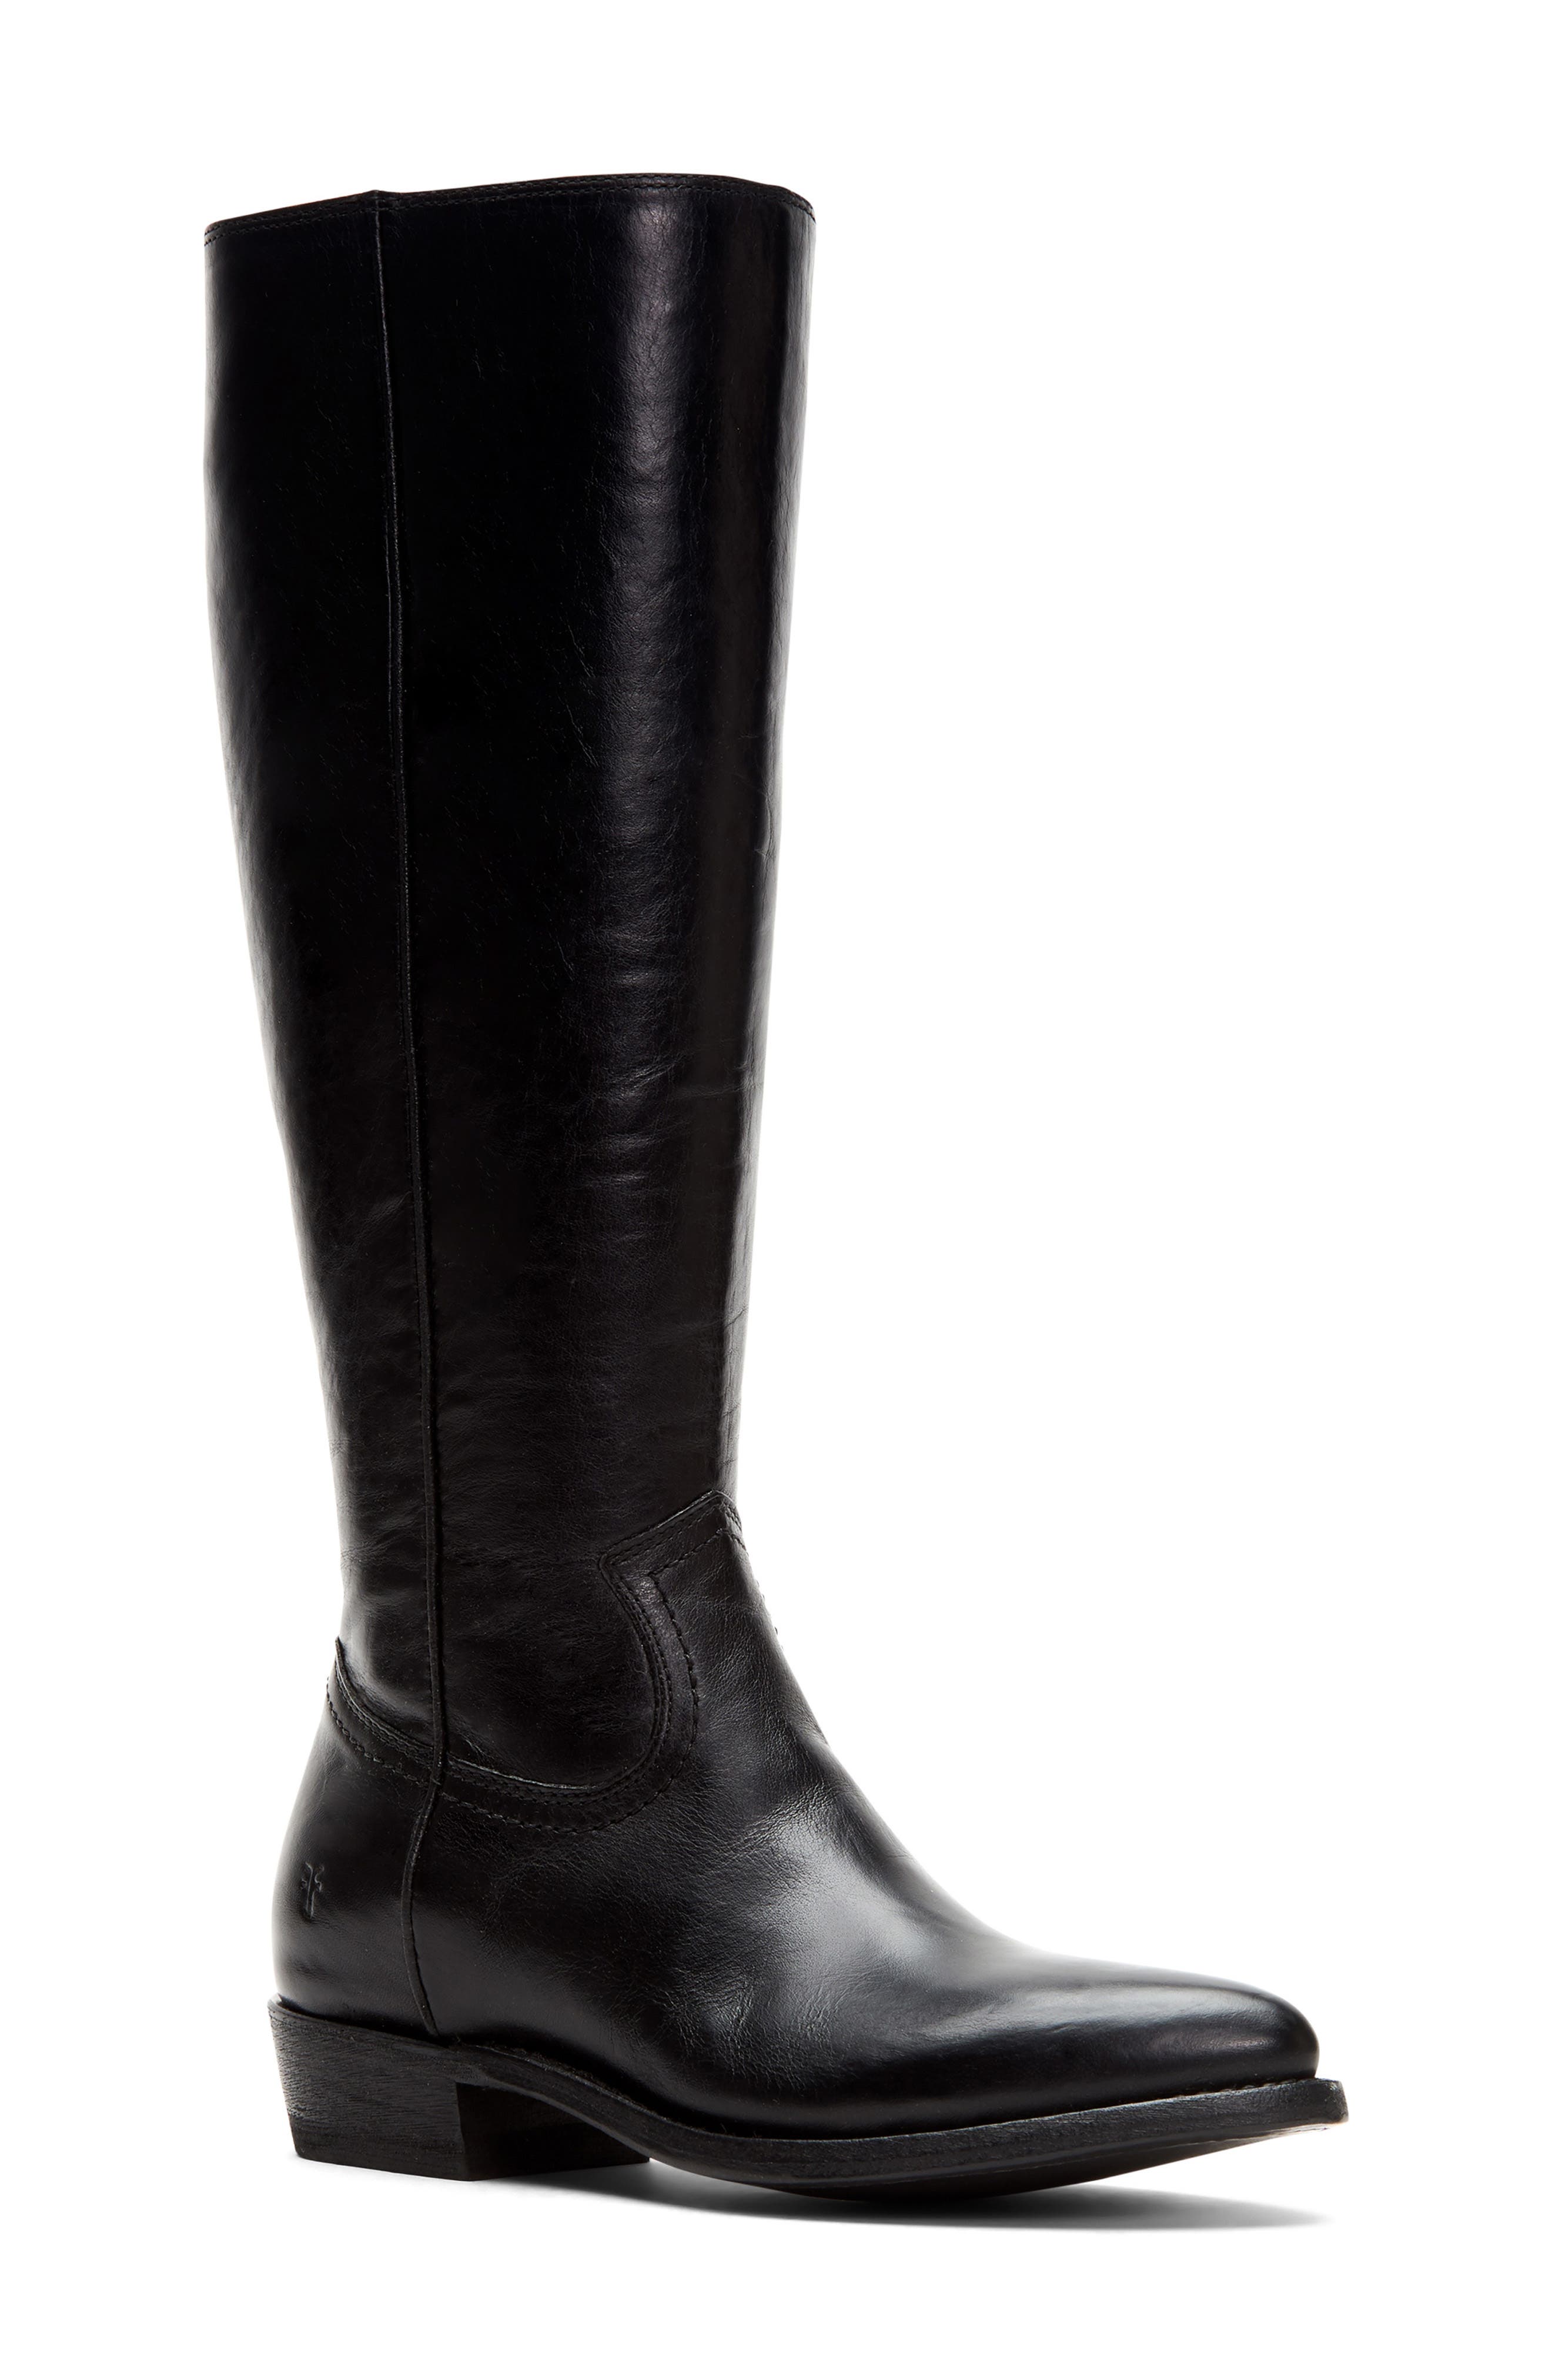 nordstrom black knee high boots